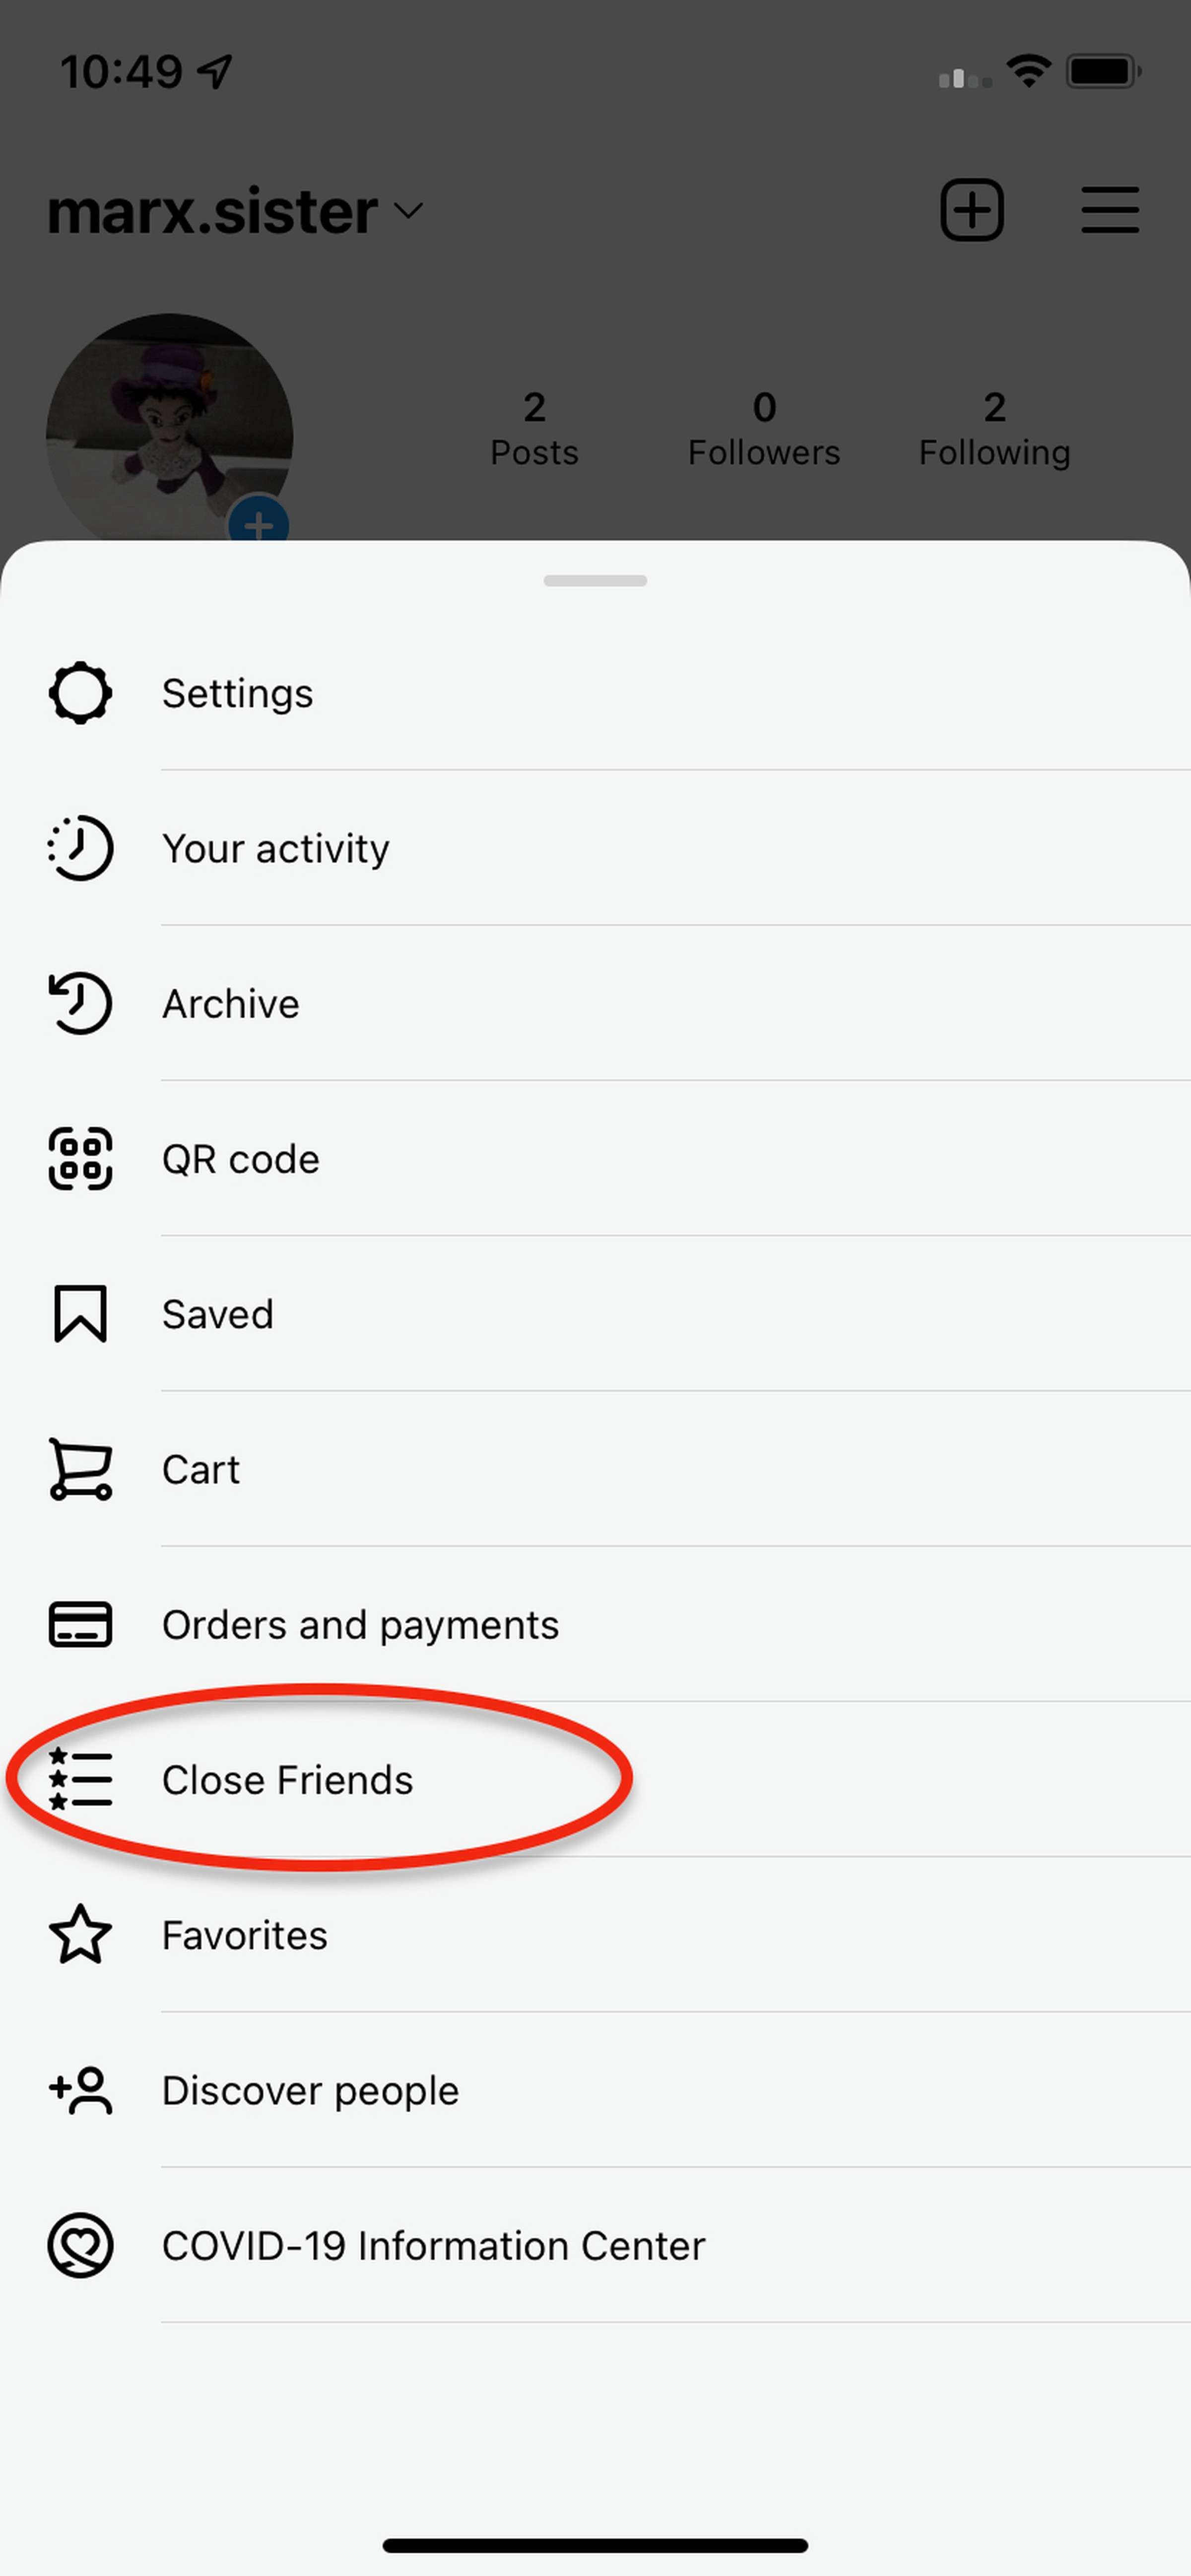 “Close Friends” circled on menu list